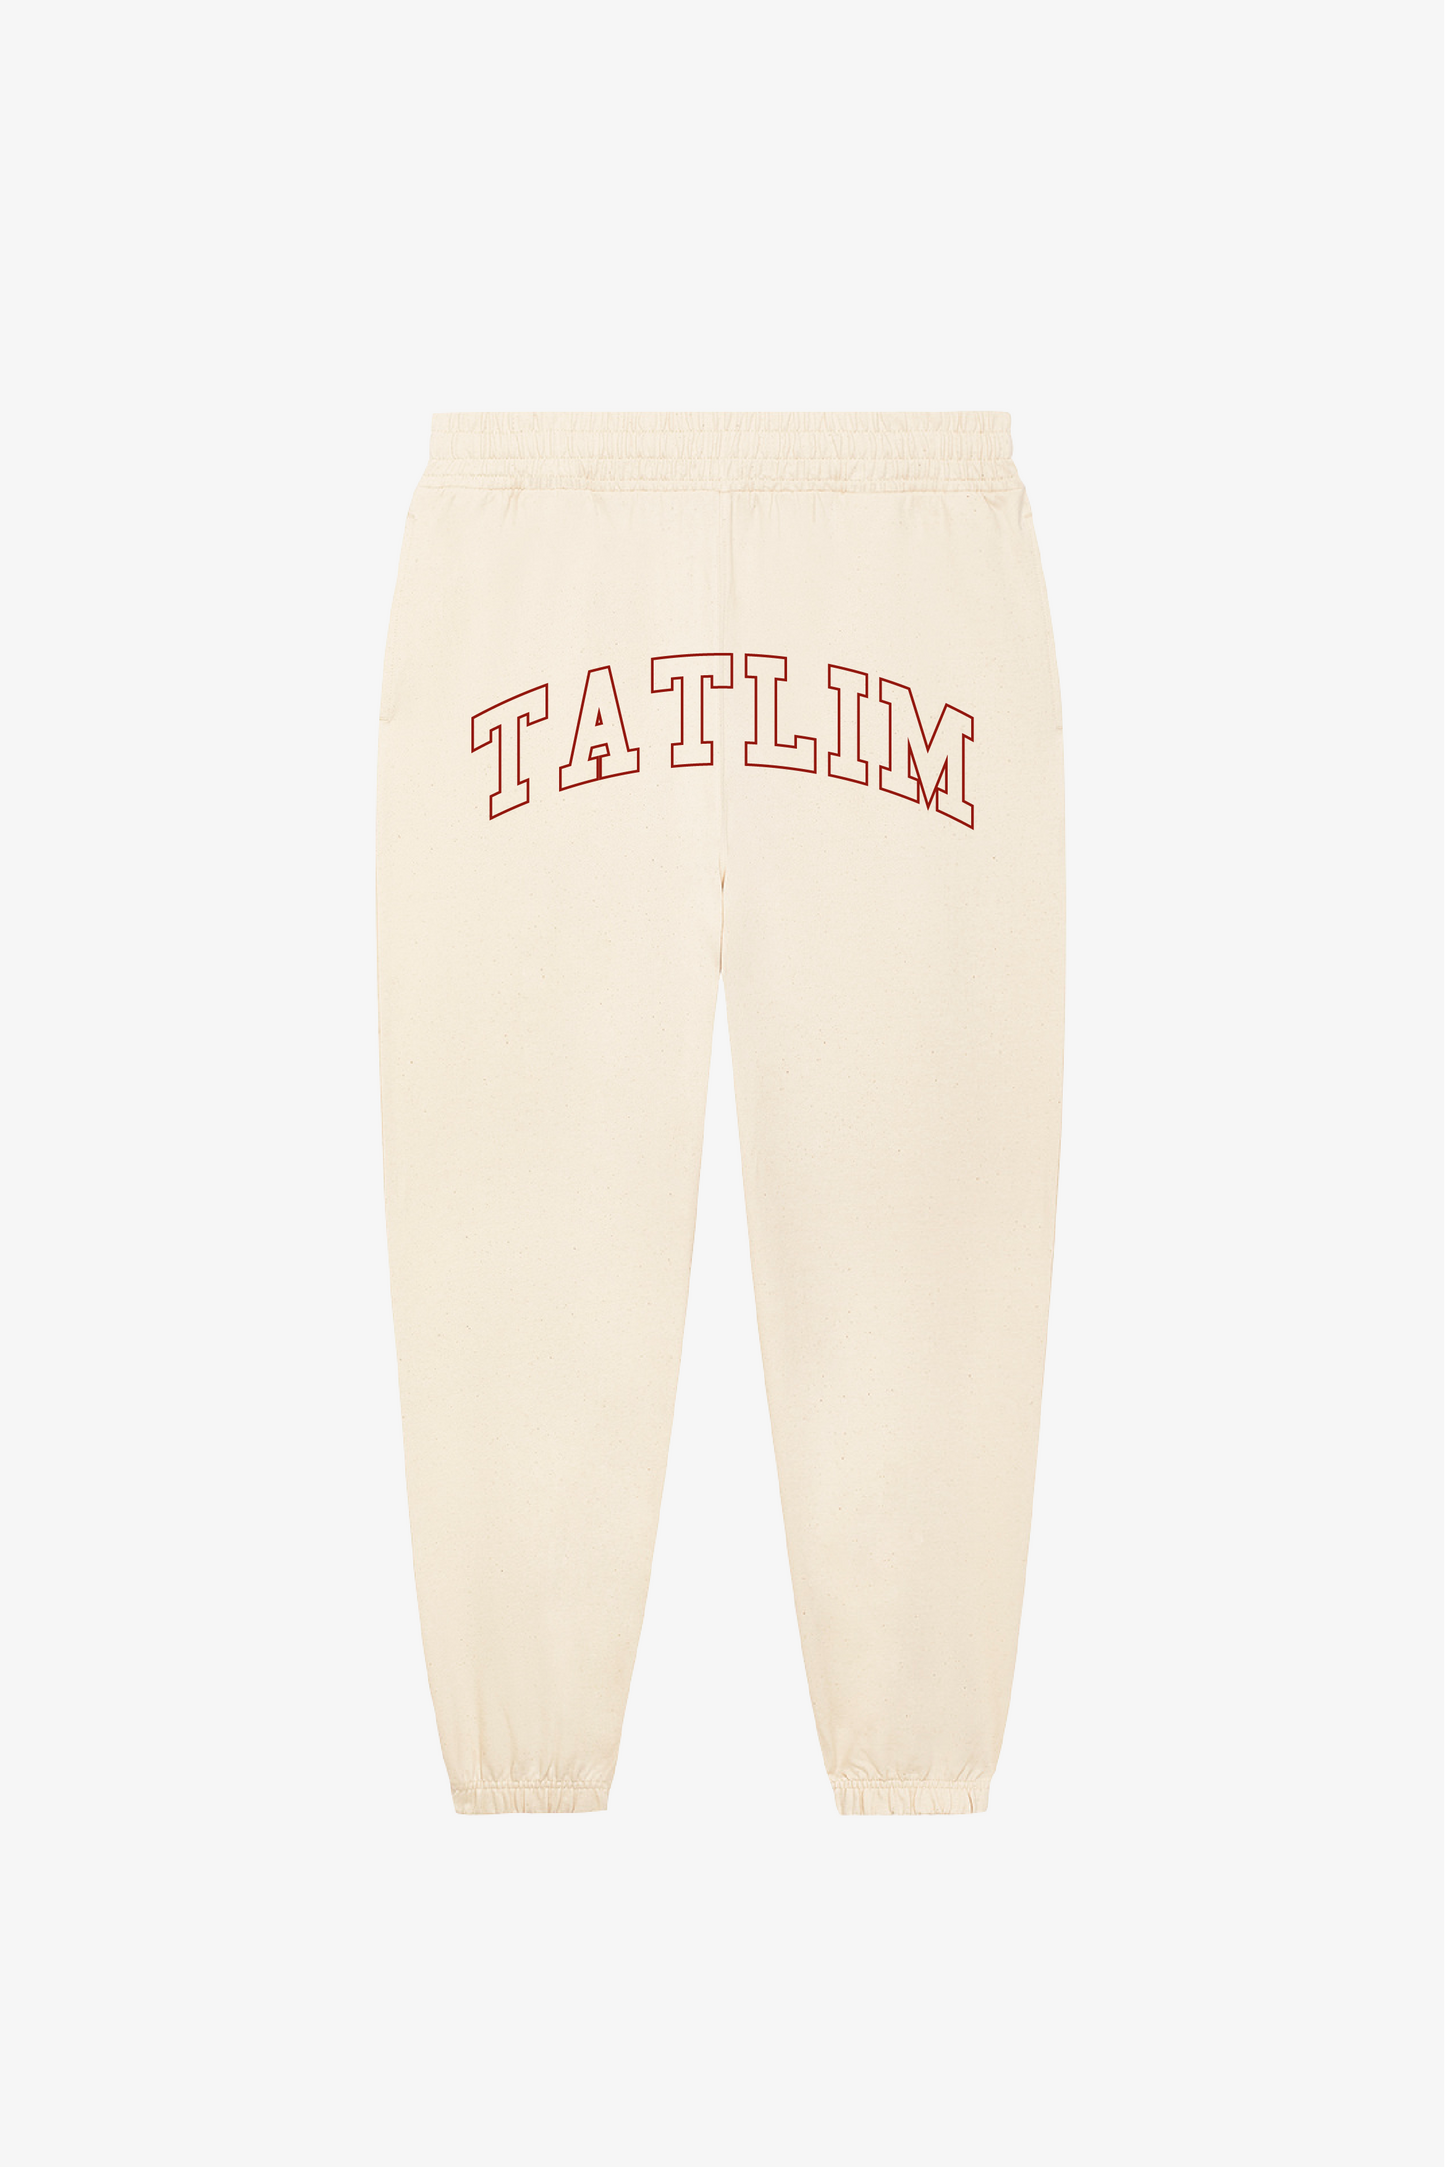 Raw Tatlim College Sweatpants